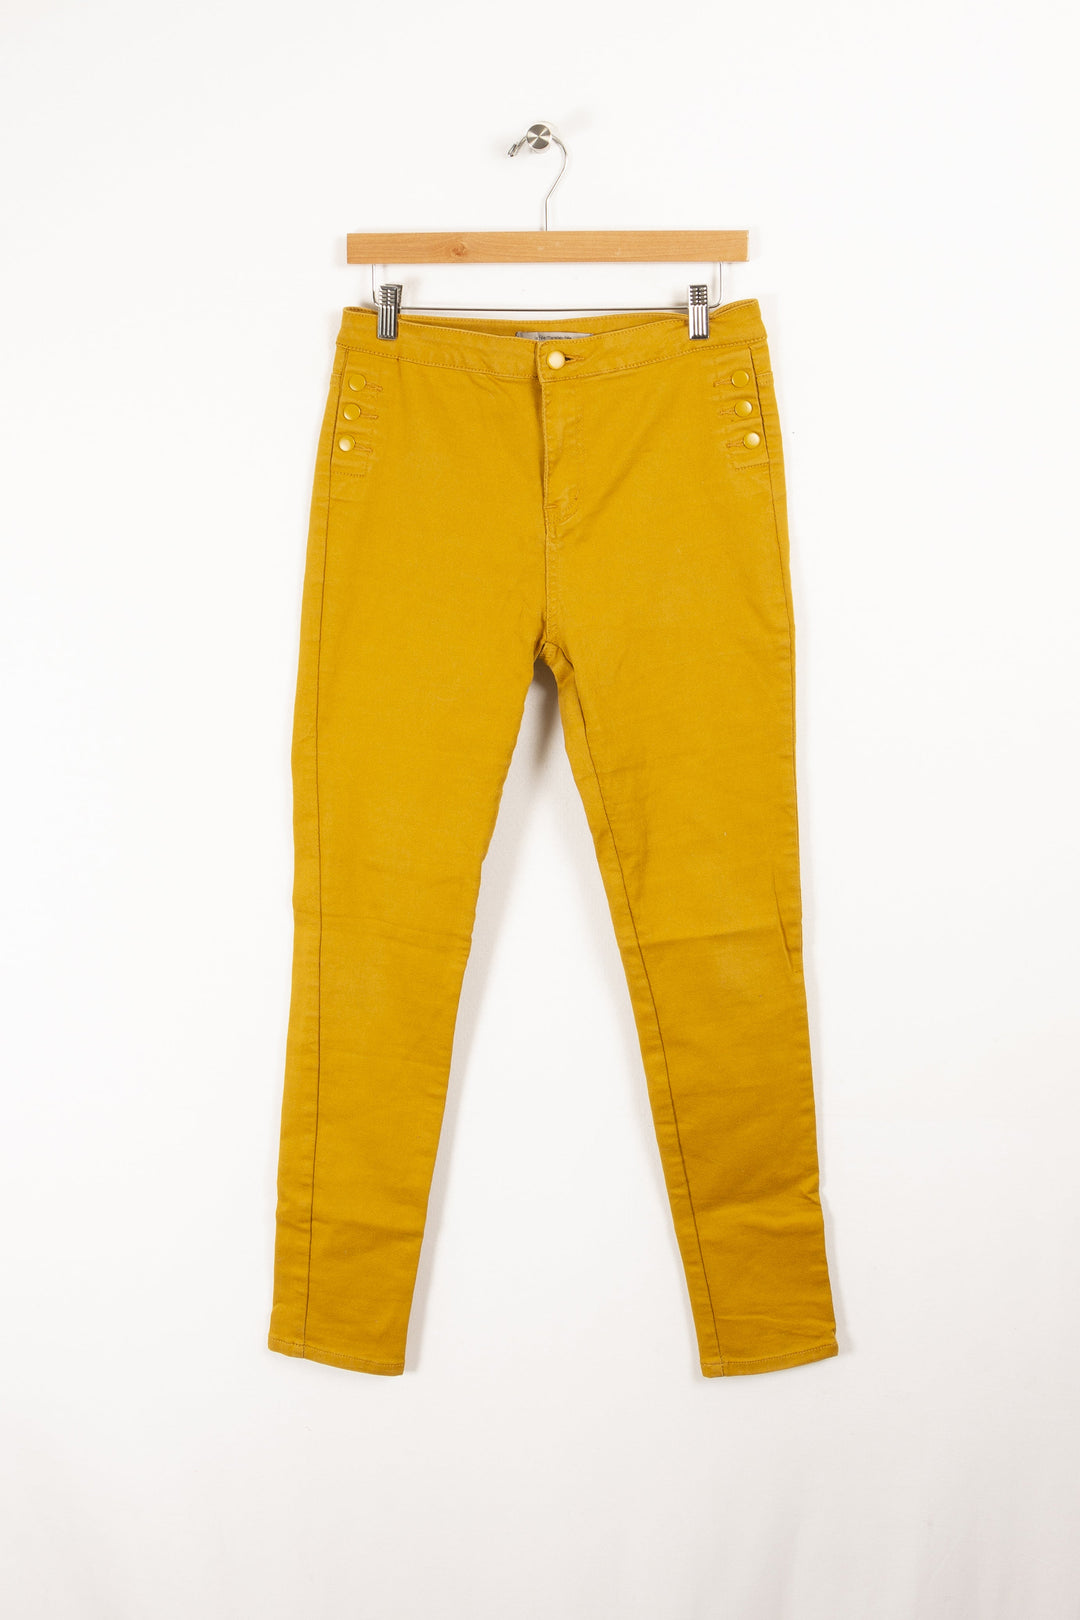 Pantalon en jean jaune - Taille L/40